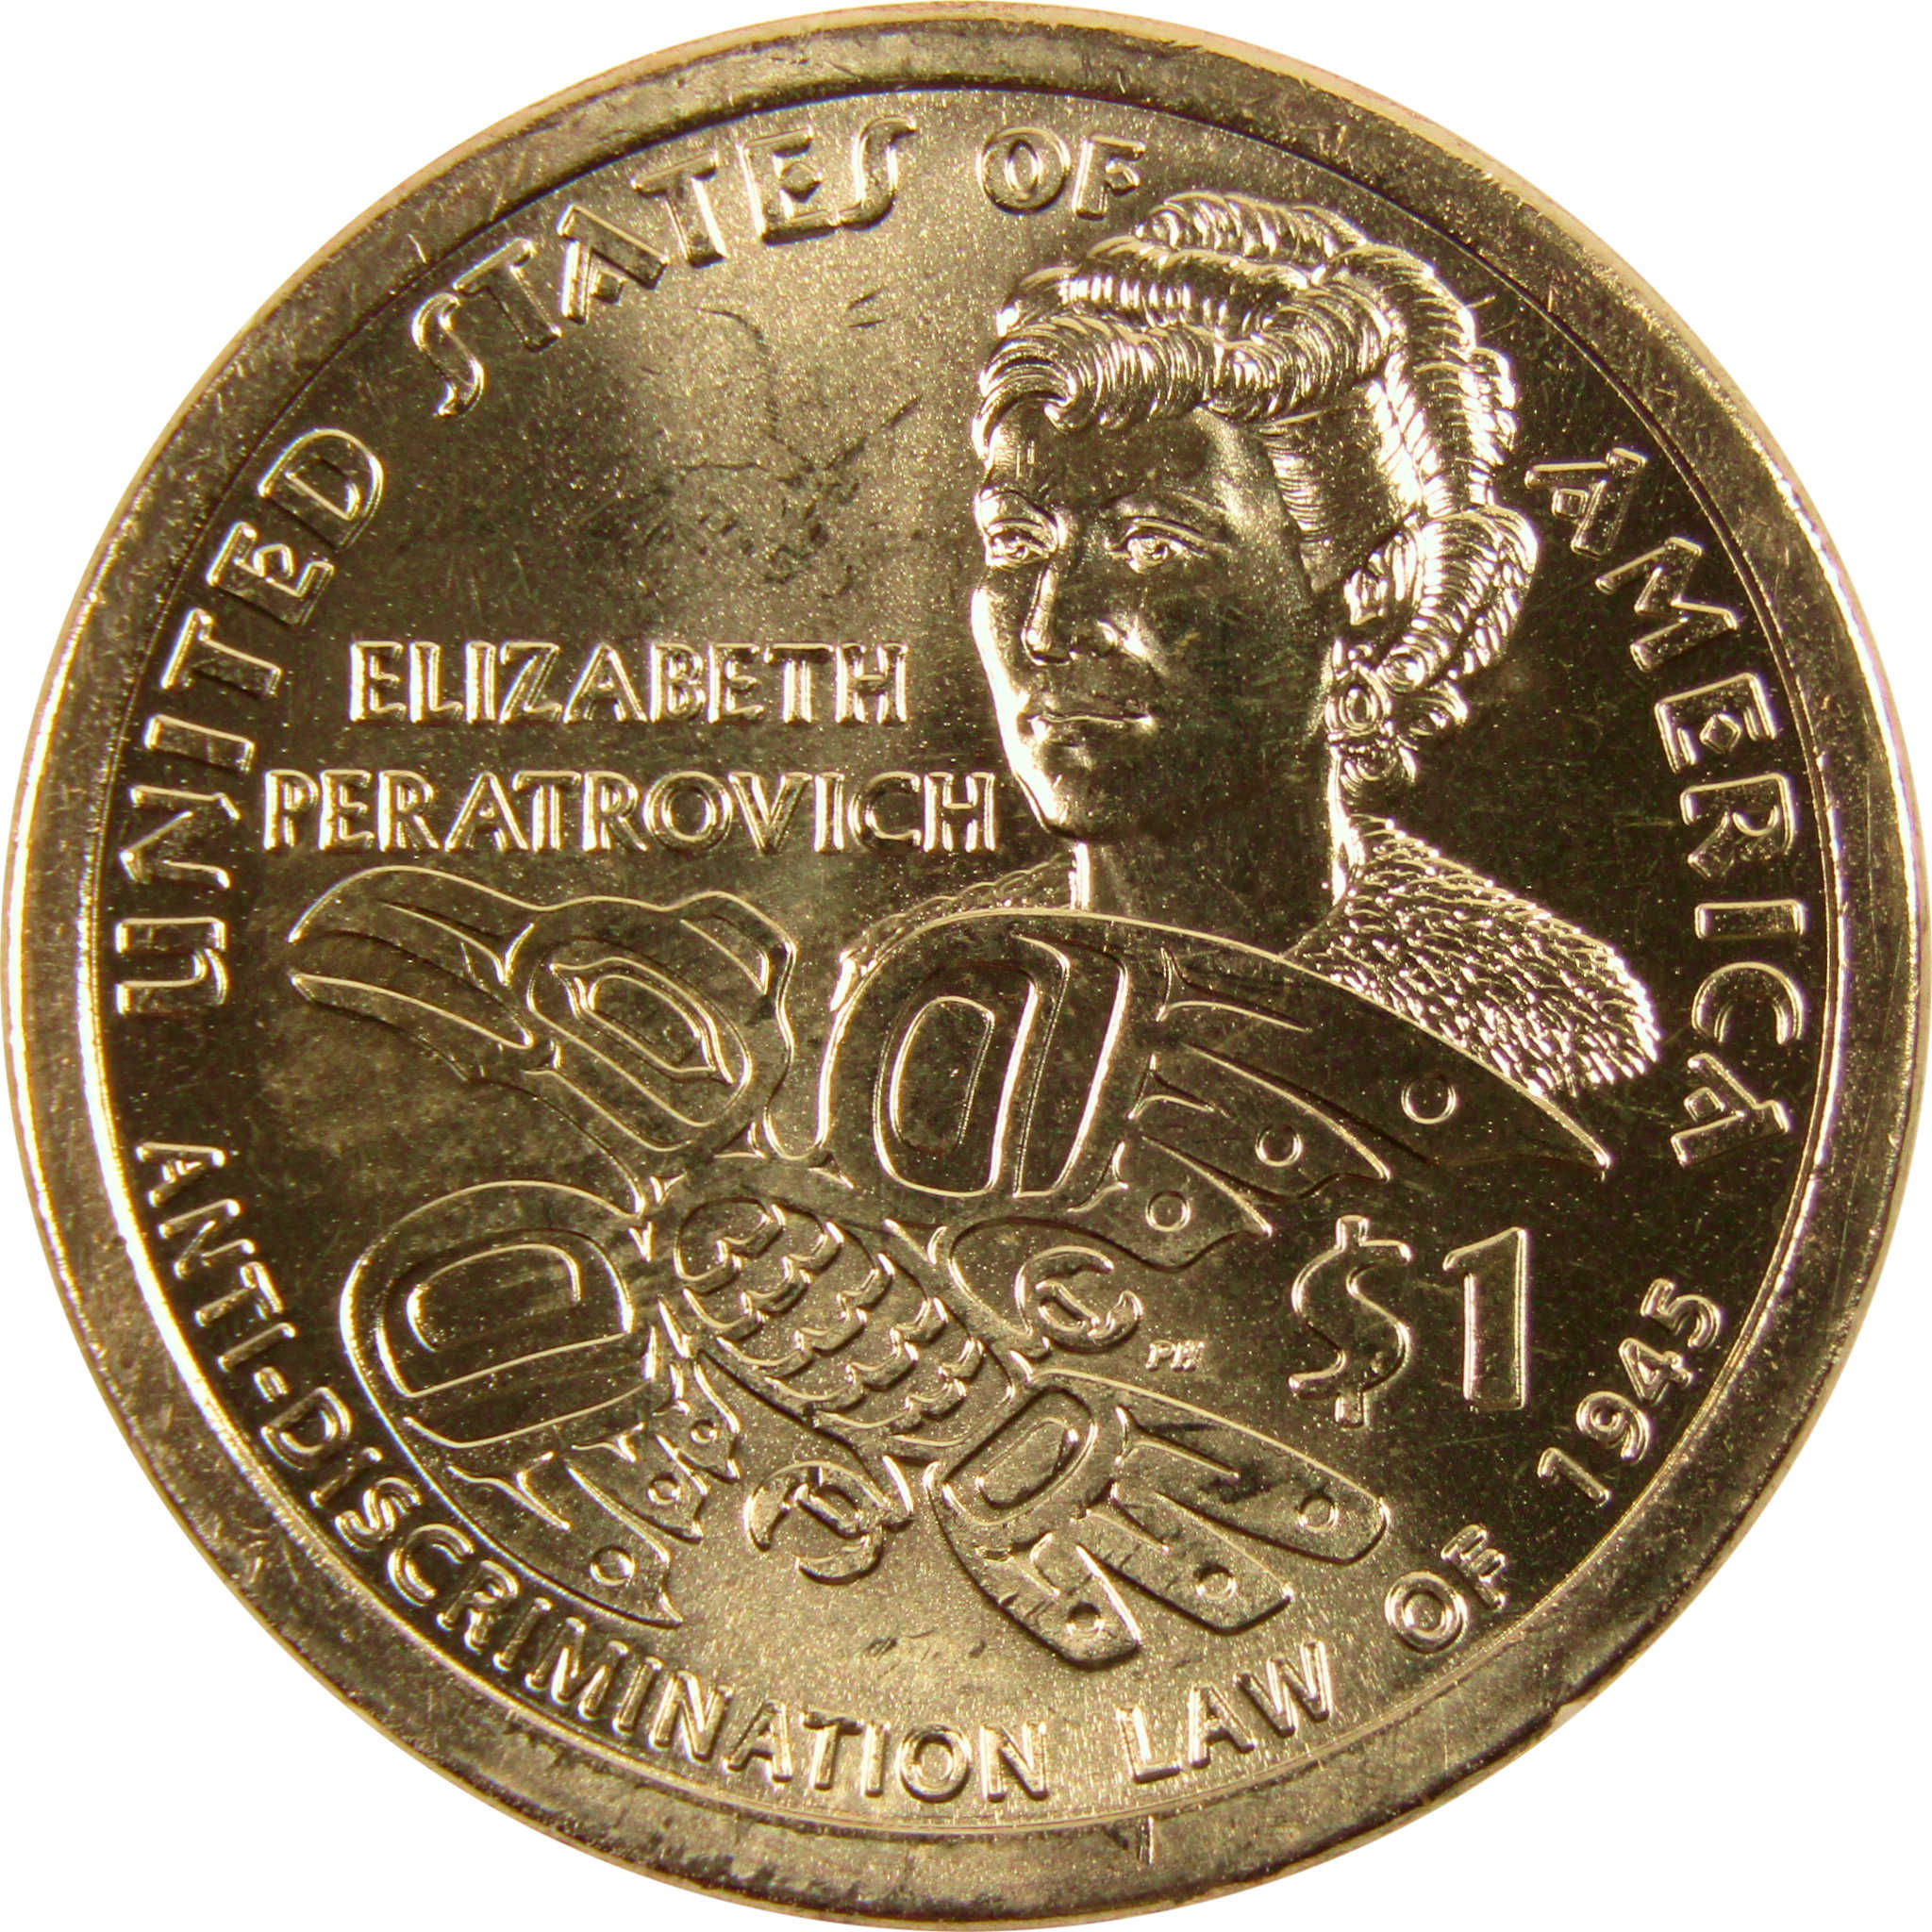 2020 P Elizabeth Peratrovich Native American Dollar BU Uncirculated $1